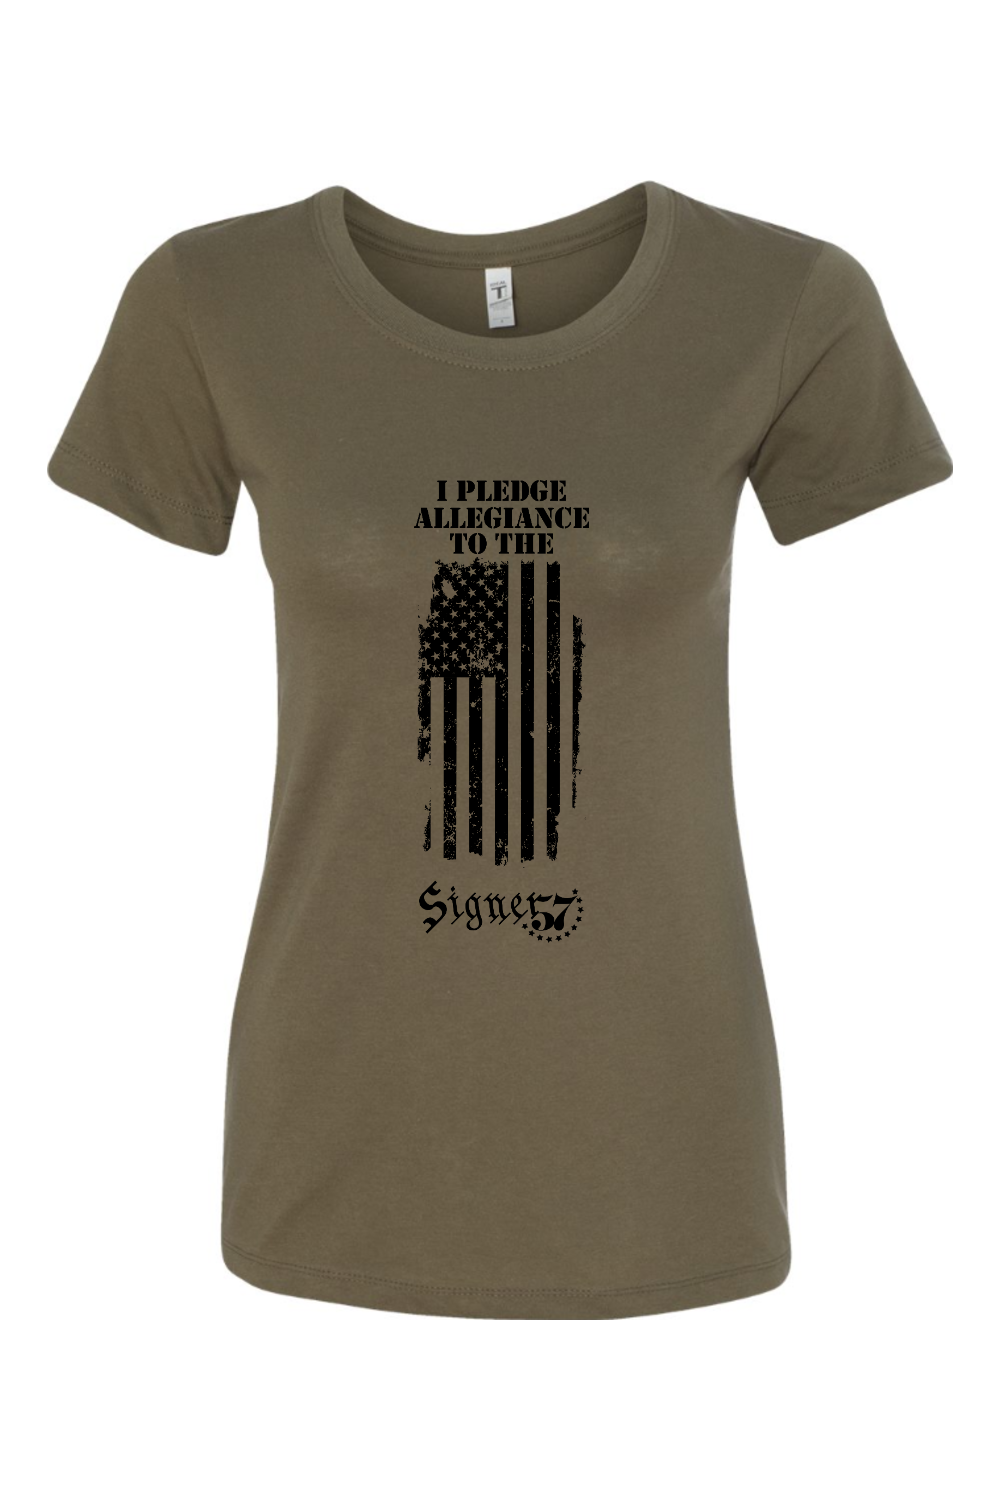 Women's T-Shirt - I Pledge Allegiance